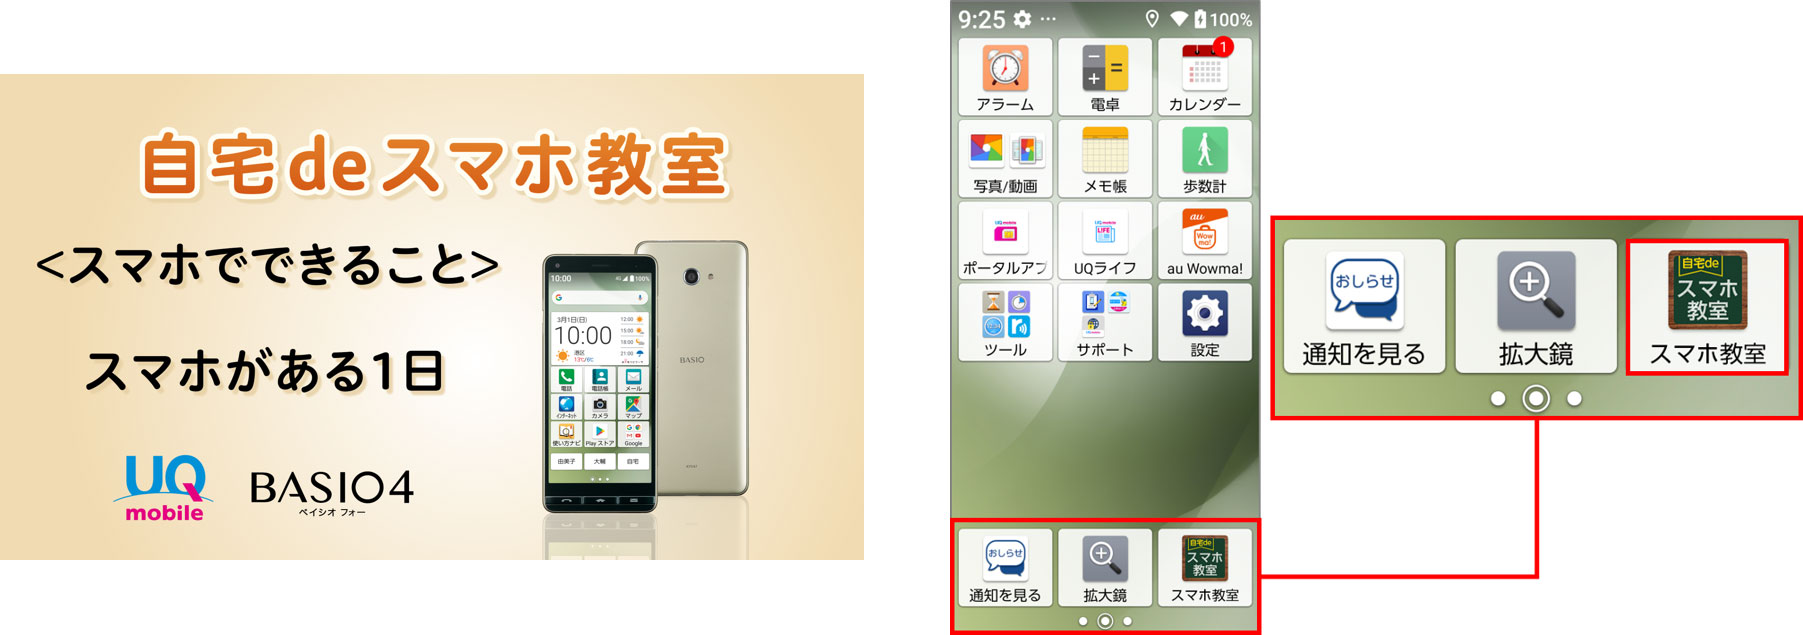 UQ mobile、シニア向けスマホ「BASIO4」2月21日から順次発売 - ITmedia Mobile